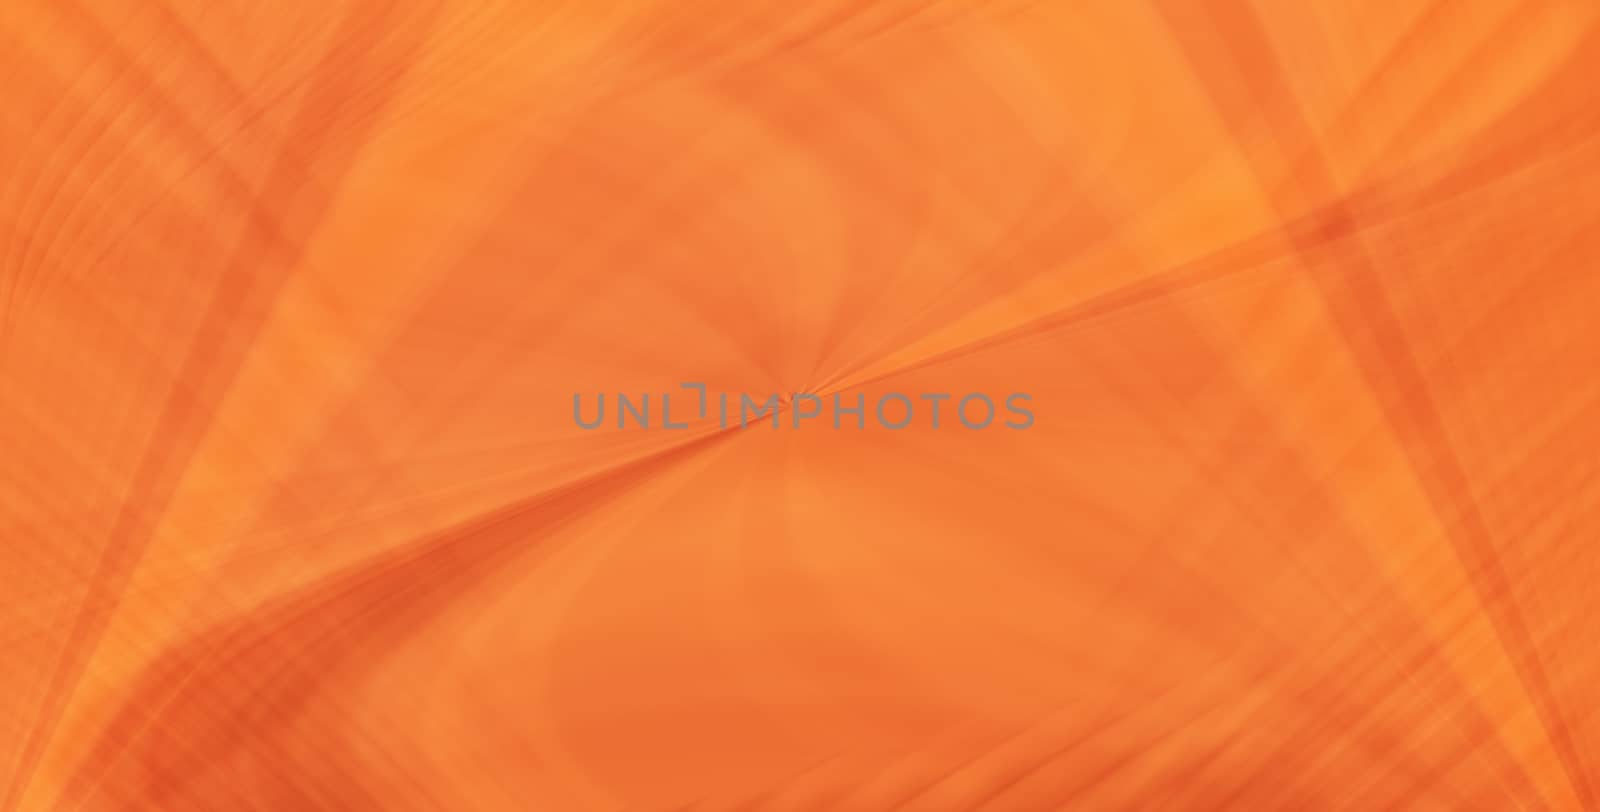 Soft orange, empty, wawey lines background.